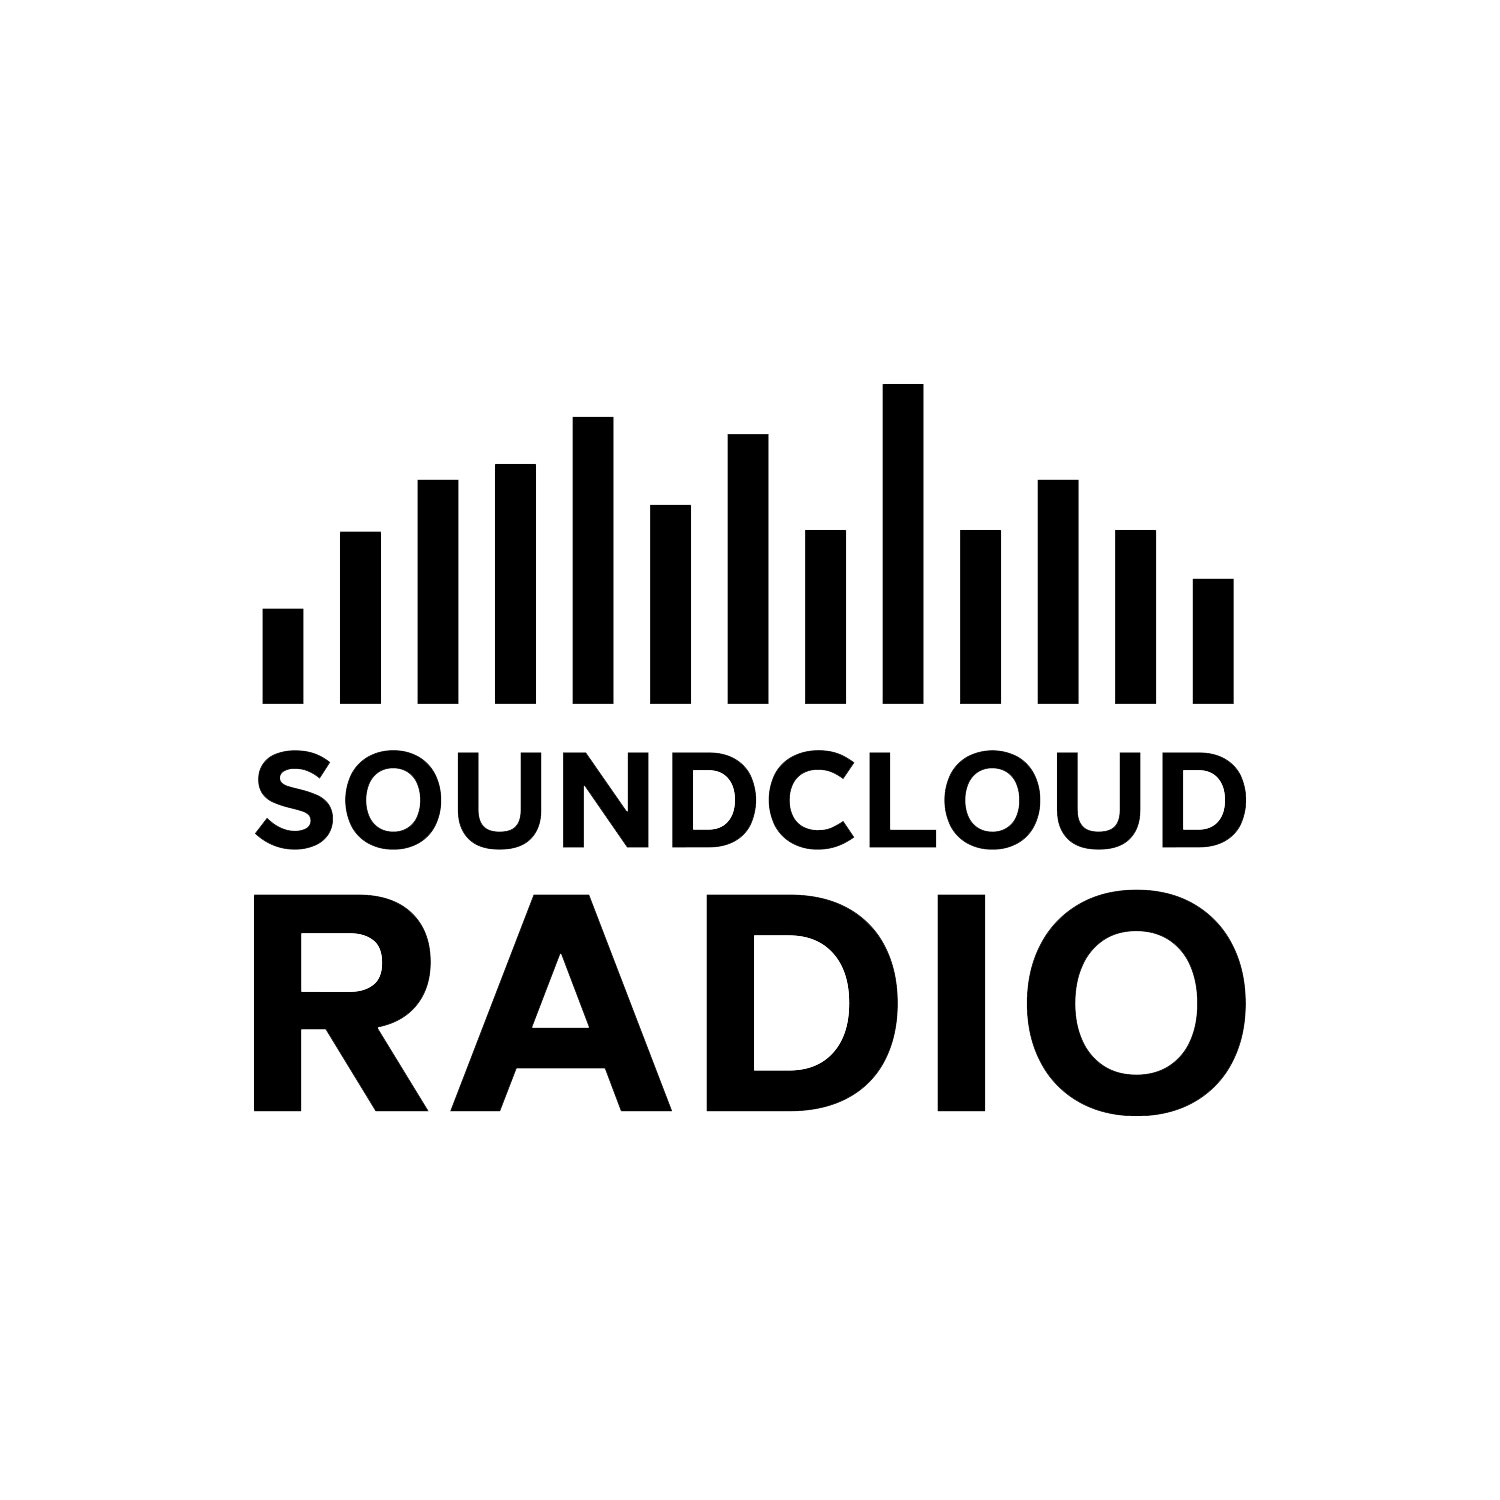 Soundcloud Radio logo